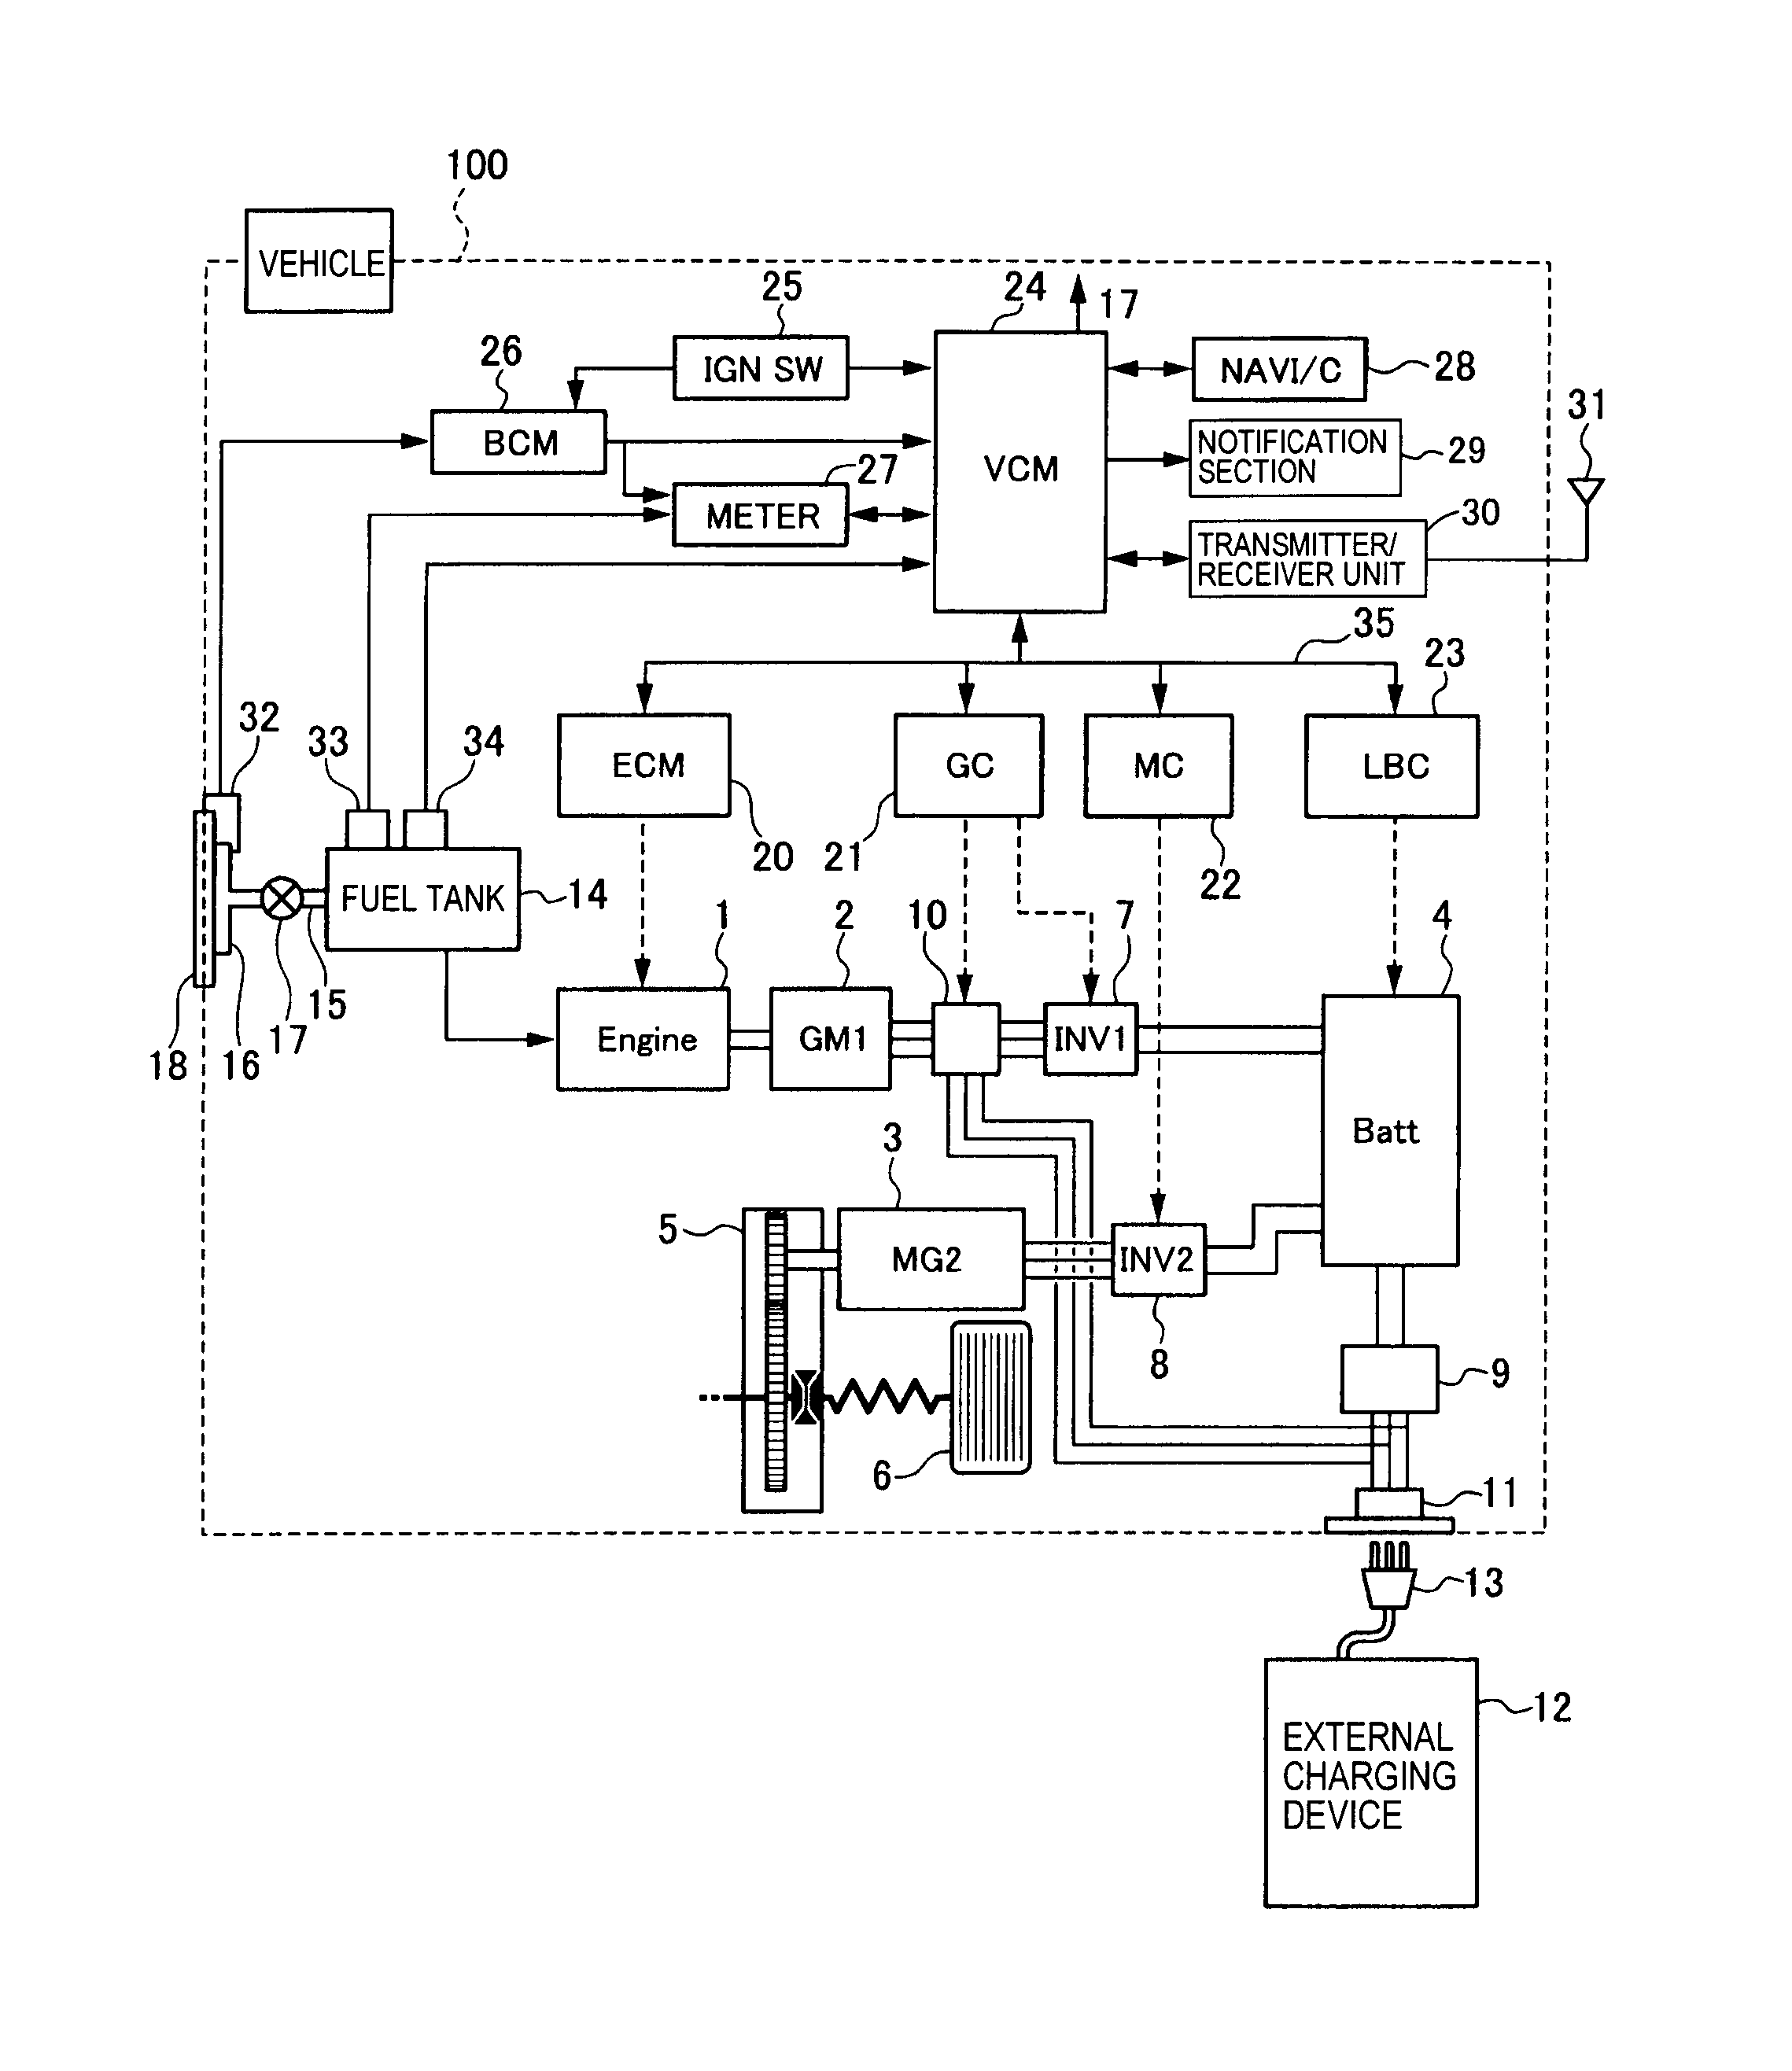 trane xv20i wiring diagram